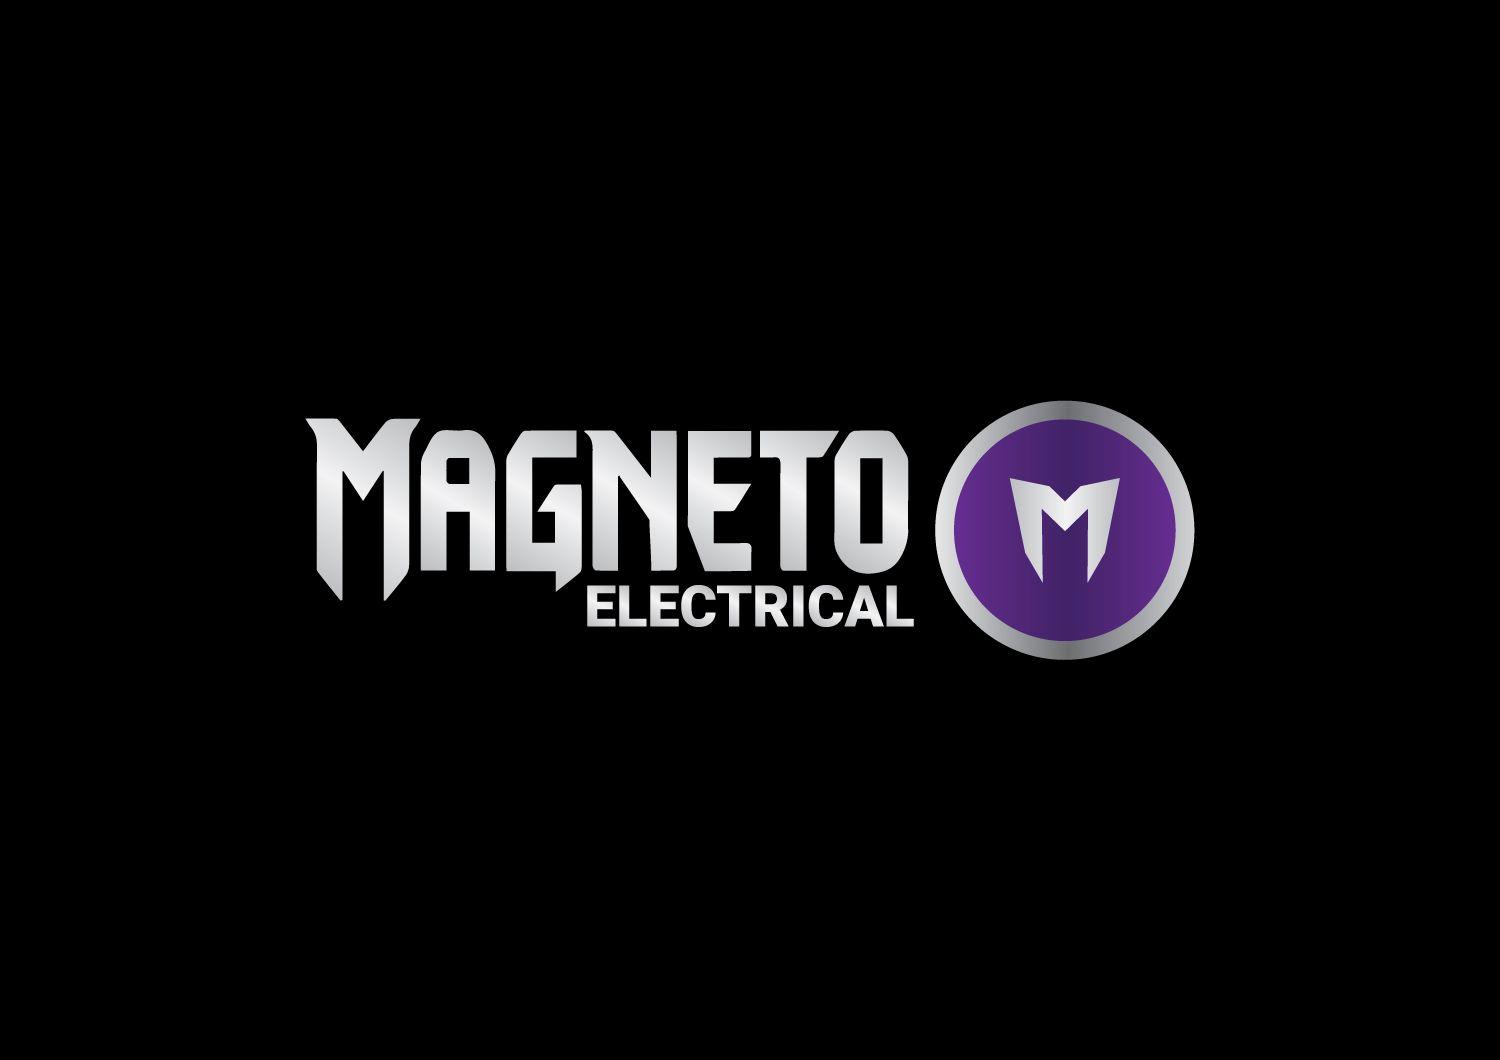 Magneto Logo - Electrical Logo Design for Magneto Electrical